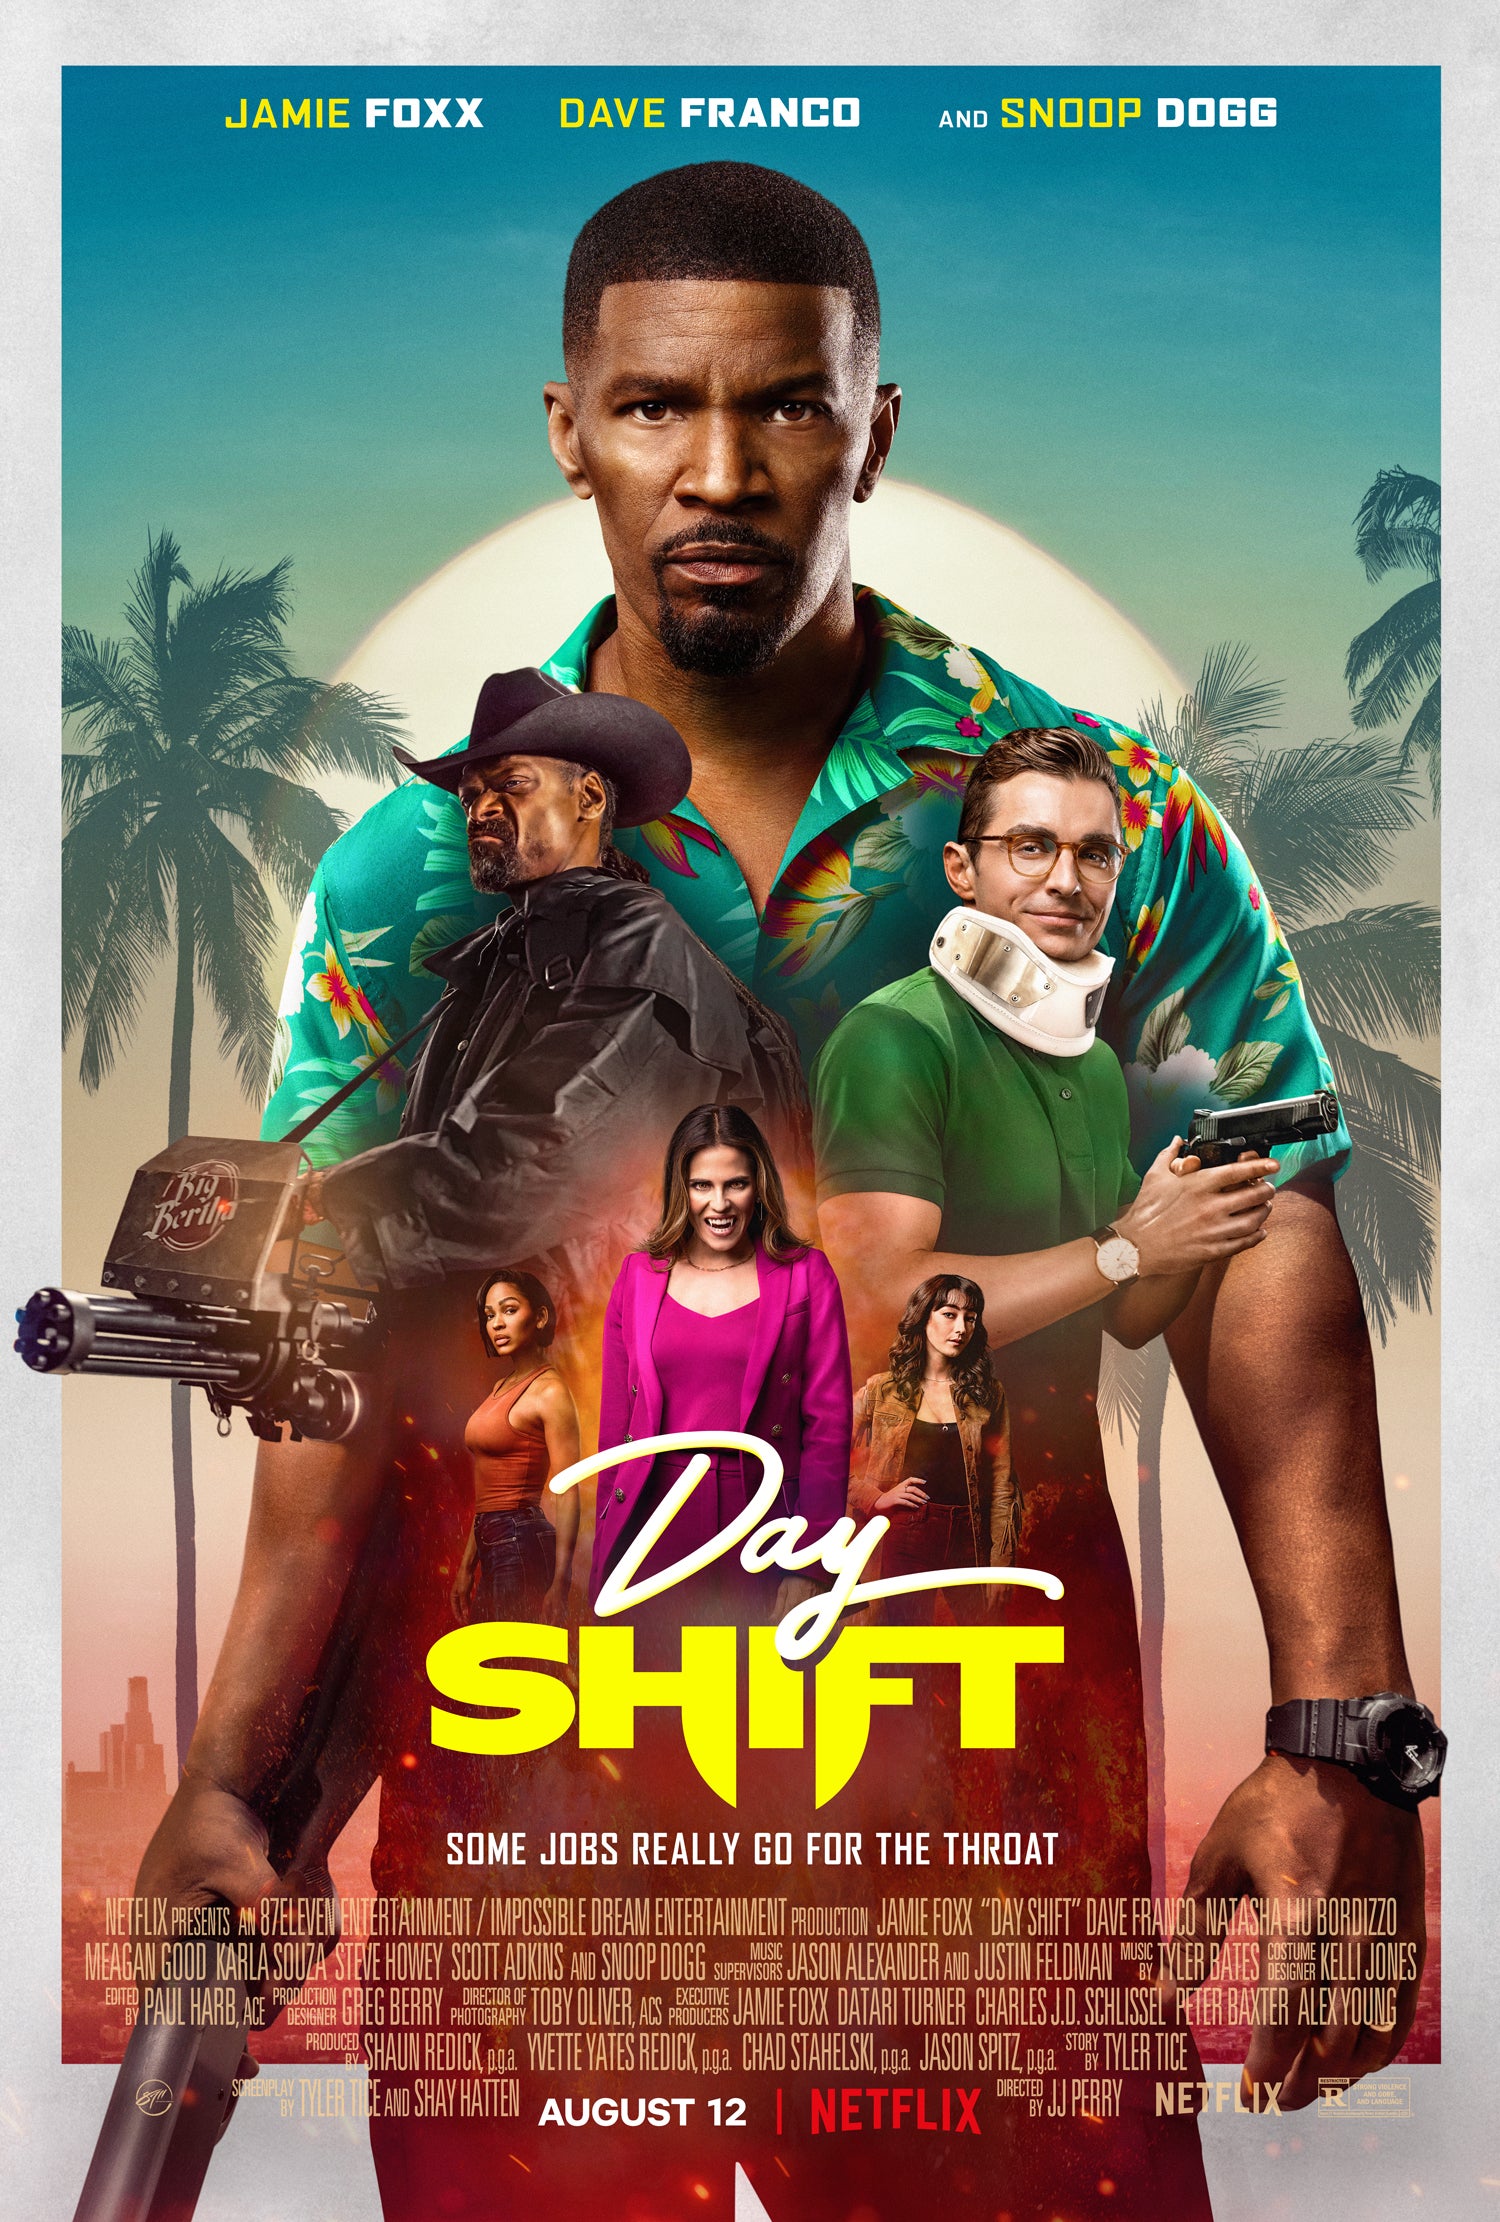 Jamie Foxx, Dave Franco Talk ‘Day Shift’ On Netflix